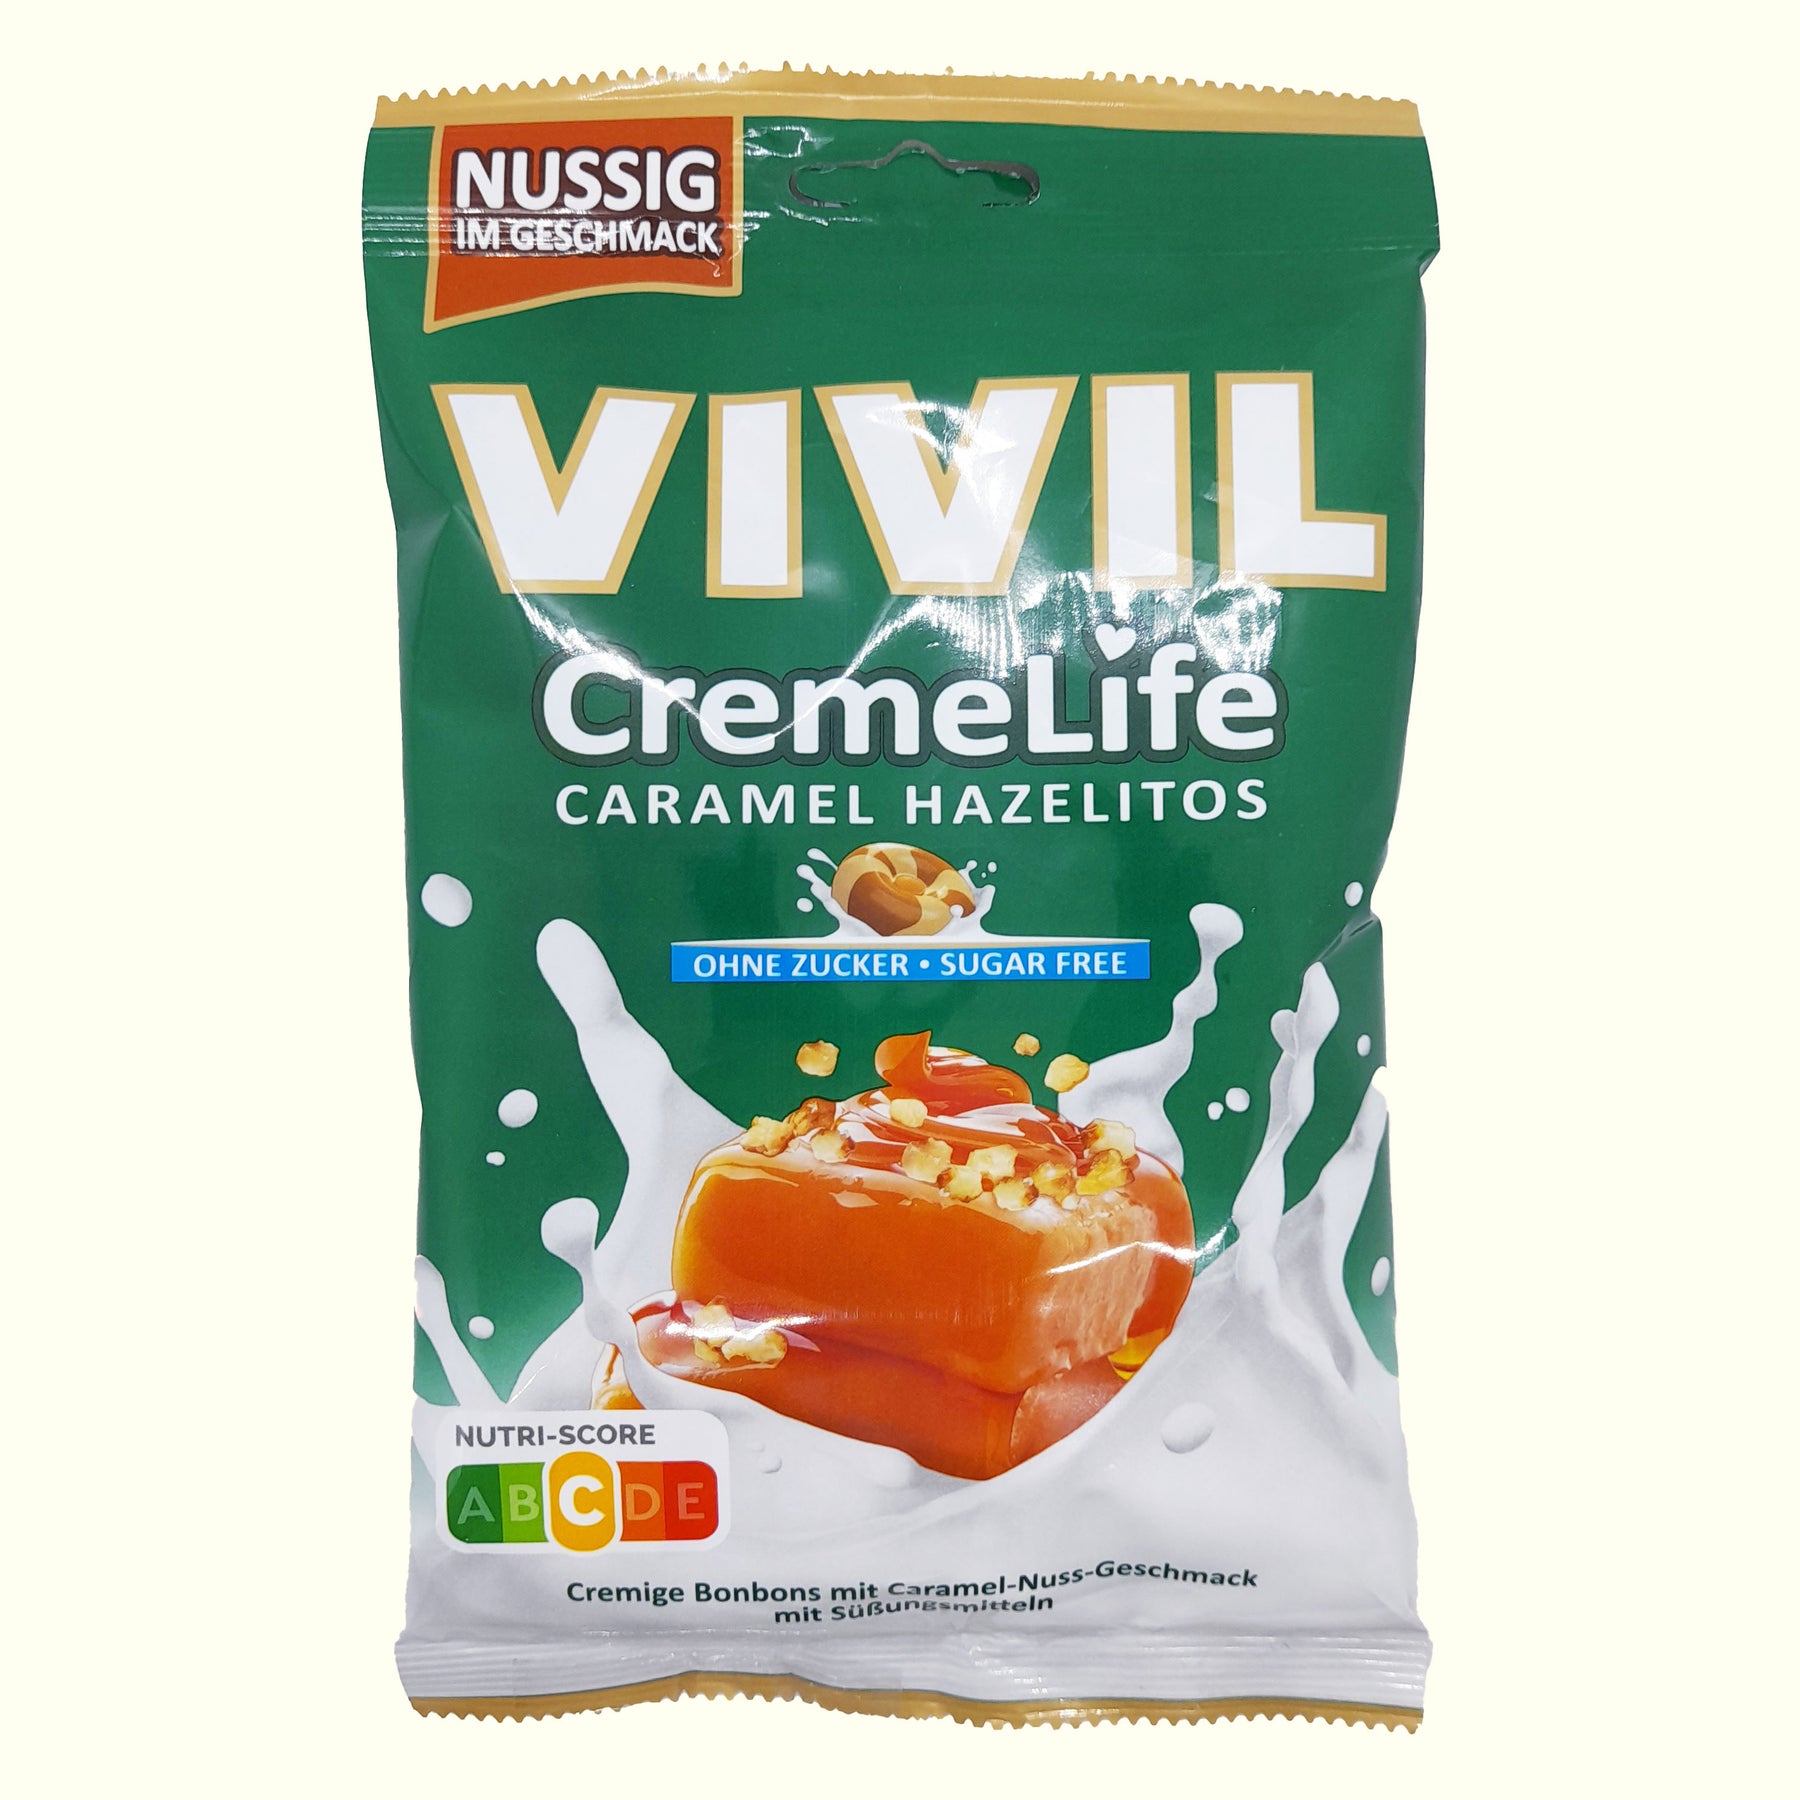 Vivil Creme Life Caramel Hazelitos zuckerfrei - 110g